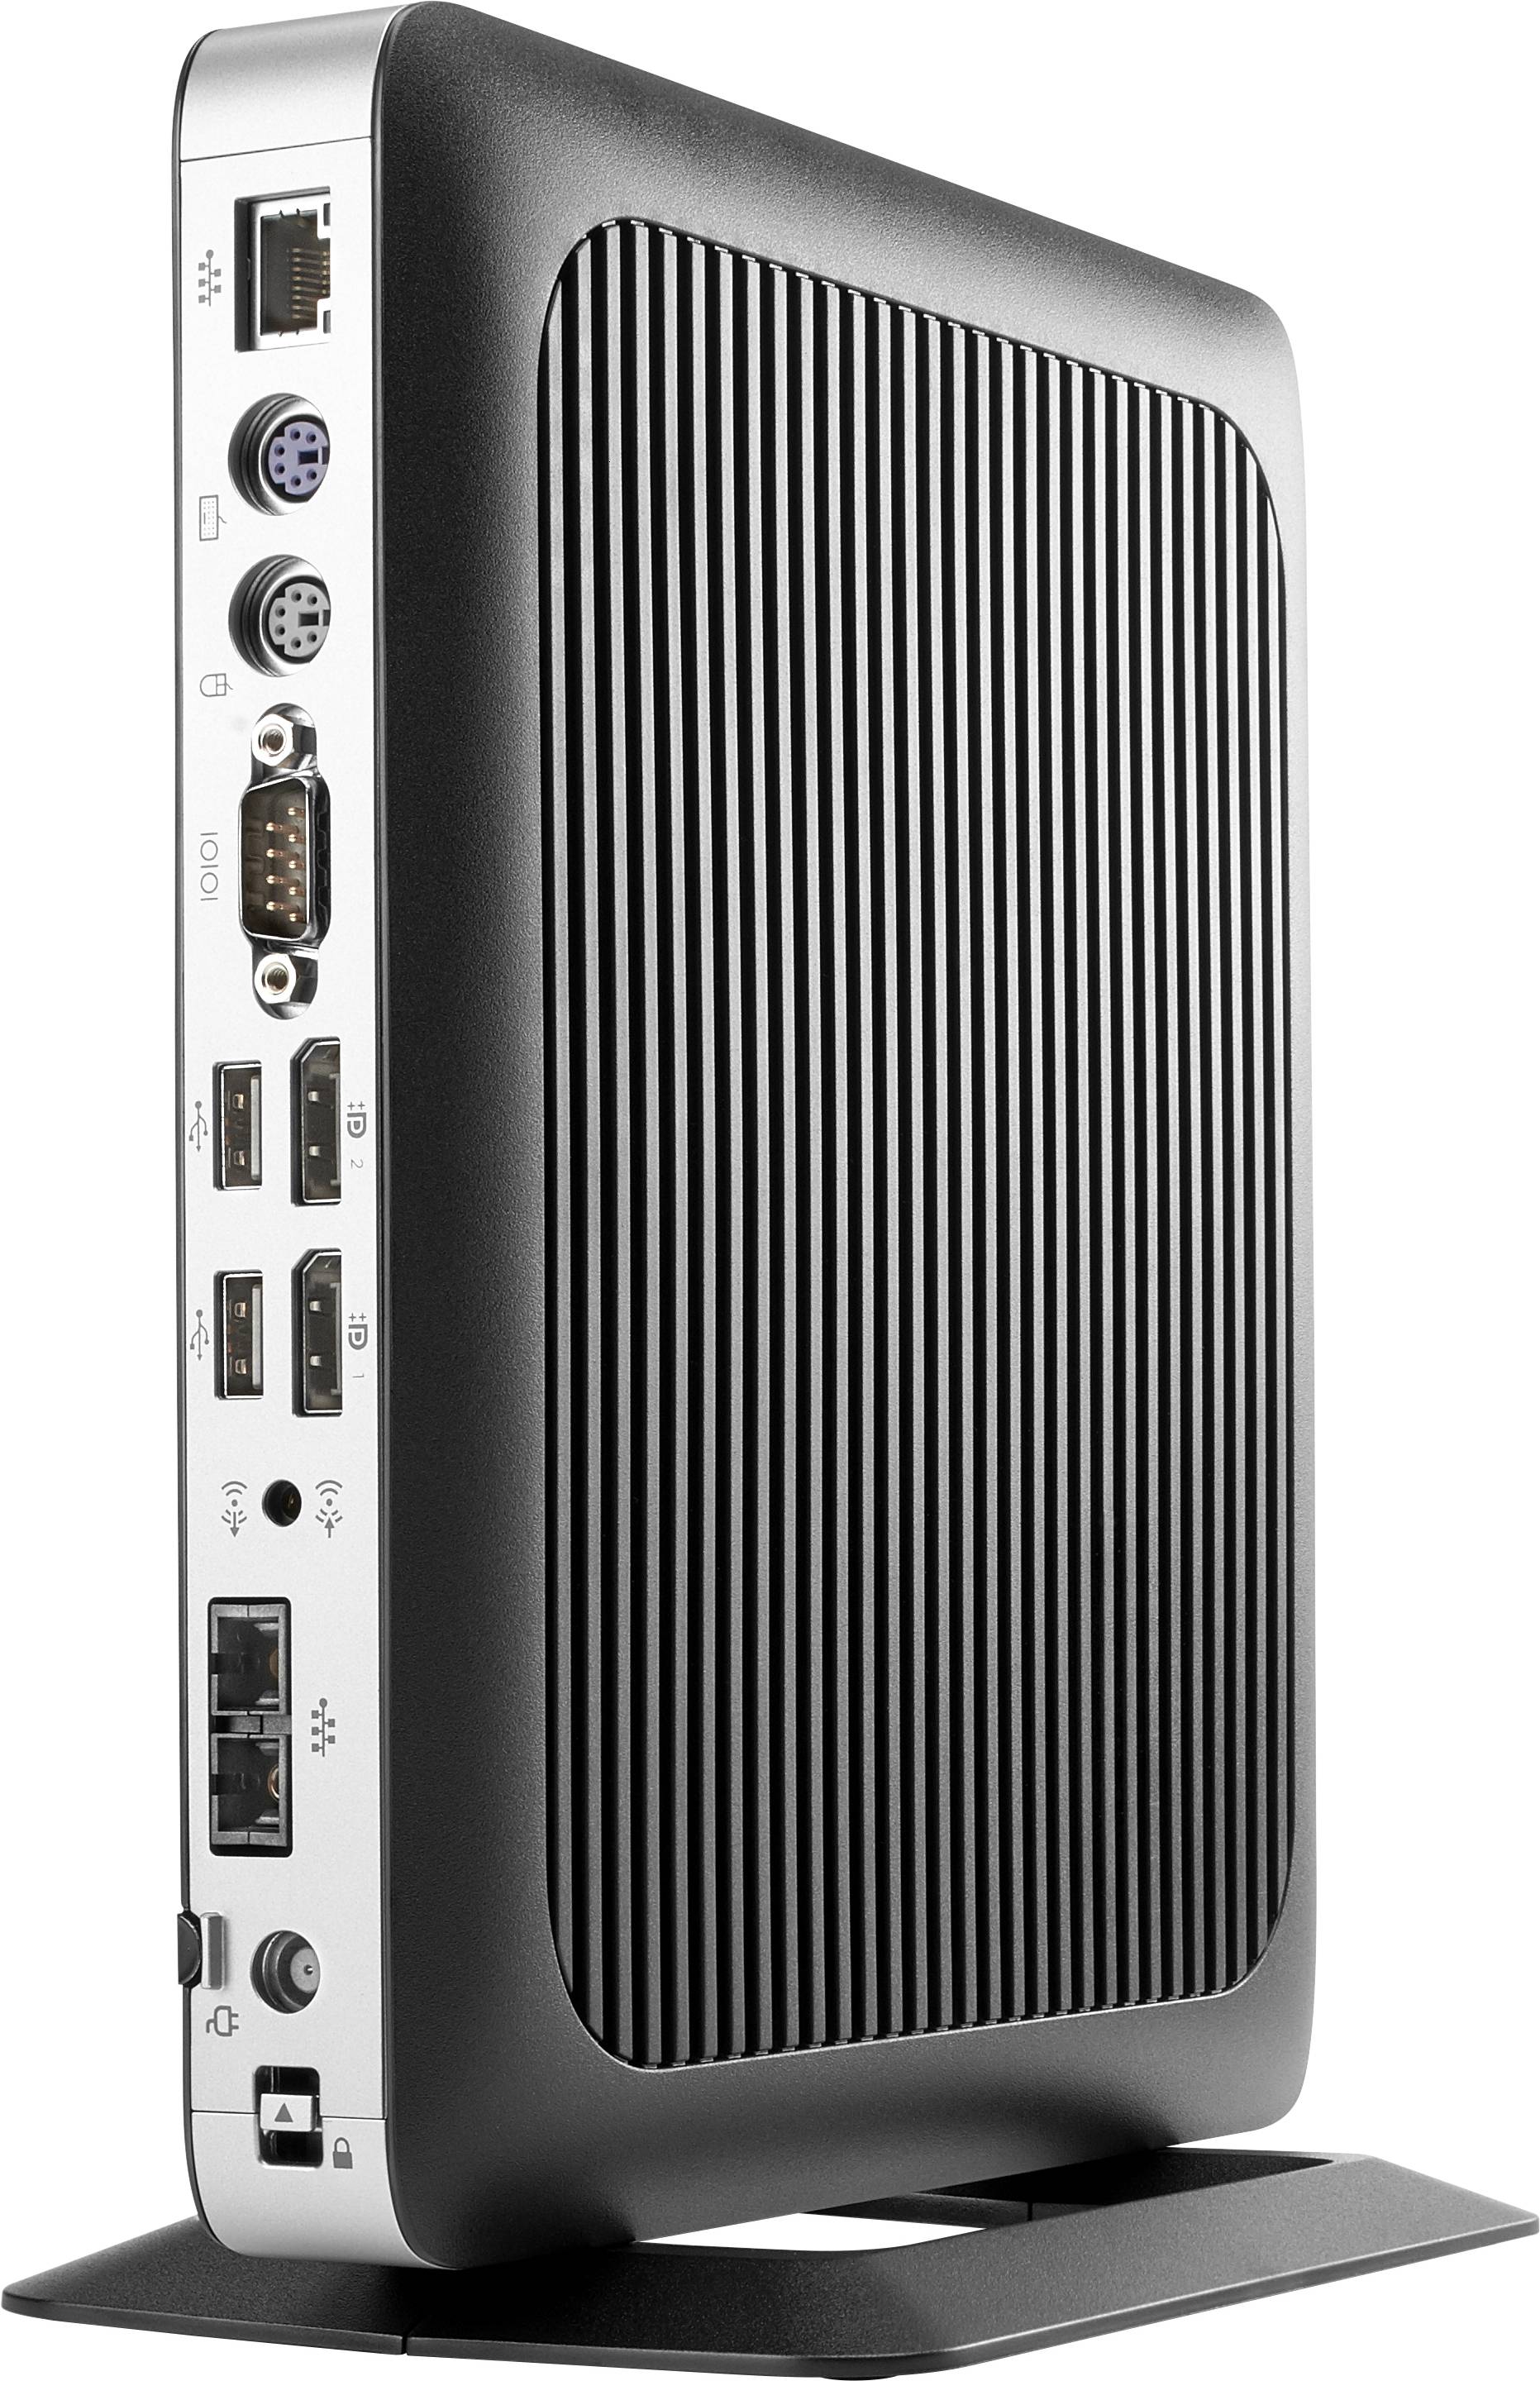 Rca Informatique - image du produit : T630 AMD GX-420GI 4GB 8GB HP SMART ZERO